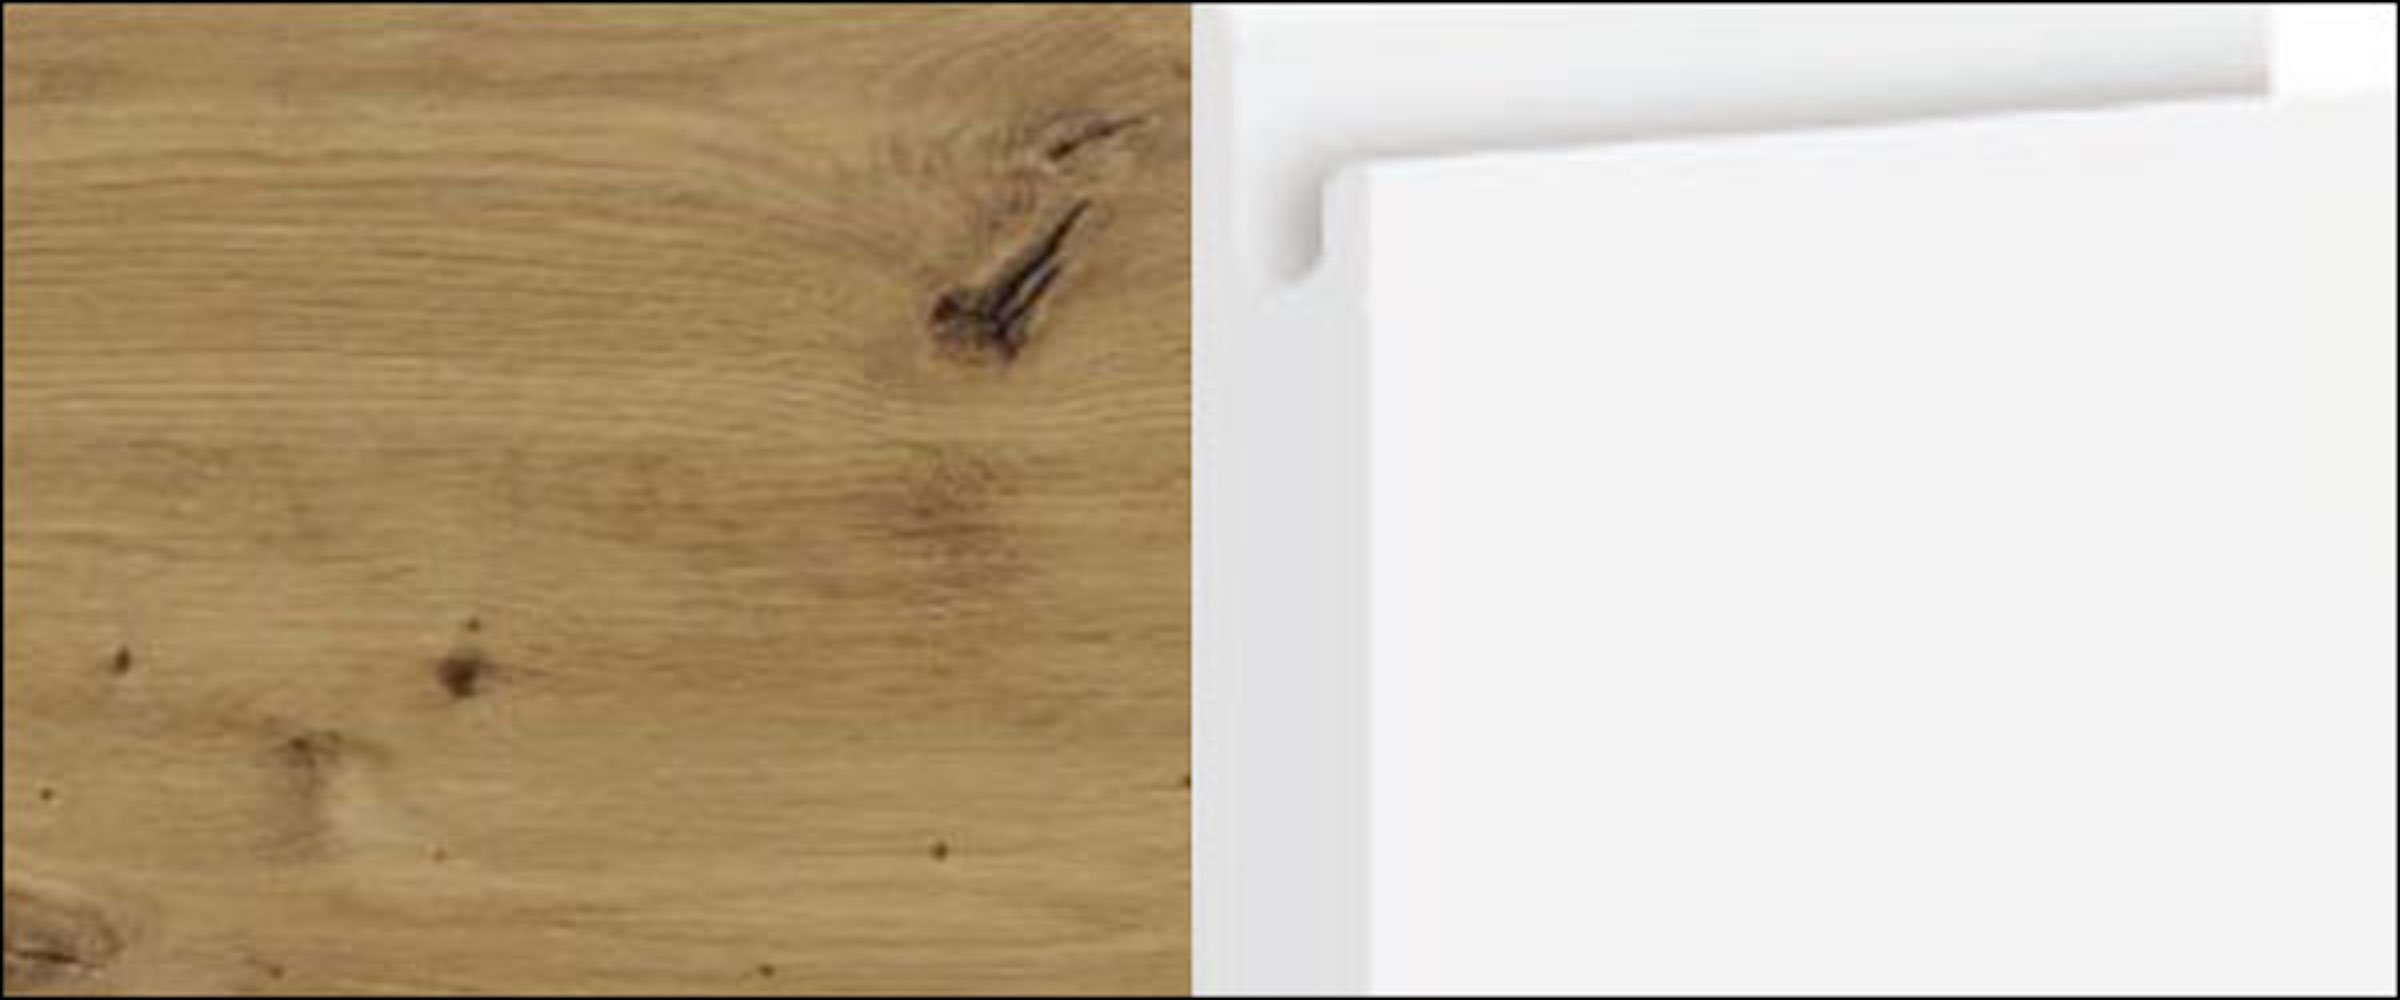 Acryl 60cm Avellino wählbar Schublade Spülenunterschrank Front- Korpusfarbe 1 grifflos (Teilauszug) & matt Feldmann-Wohnen weiß